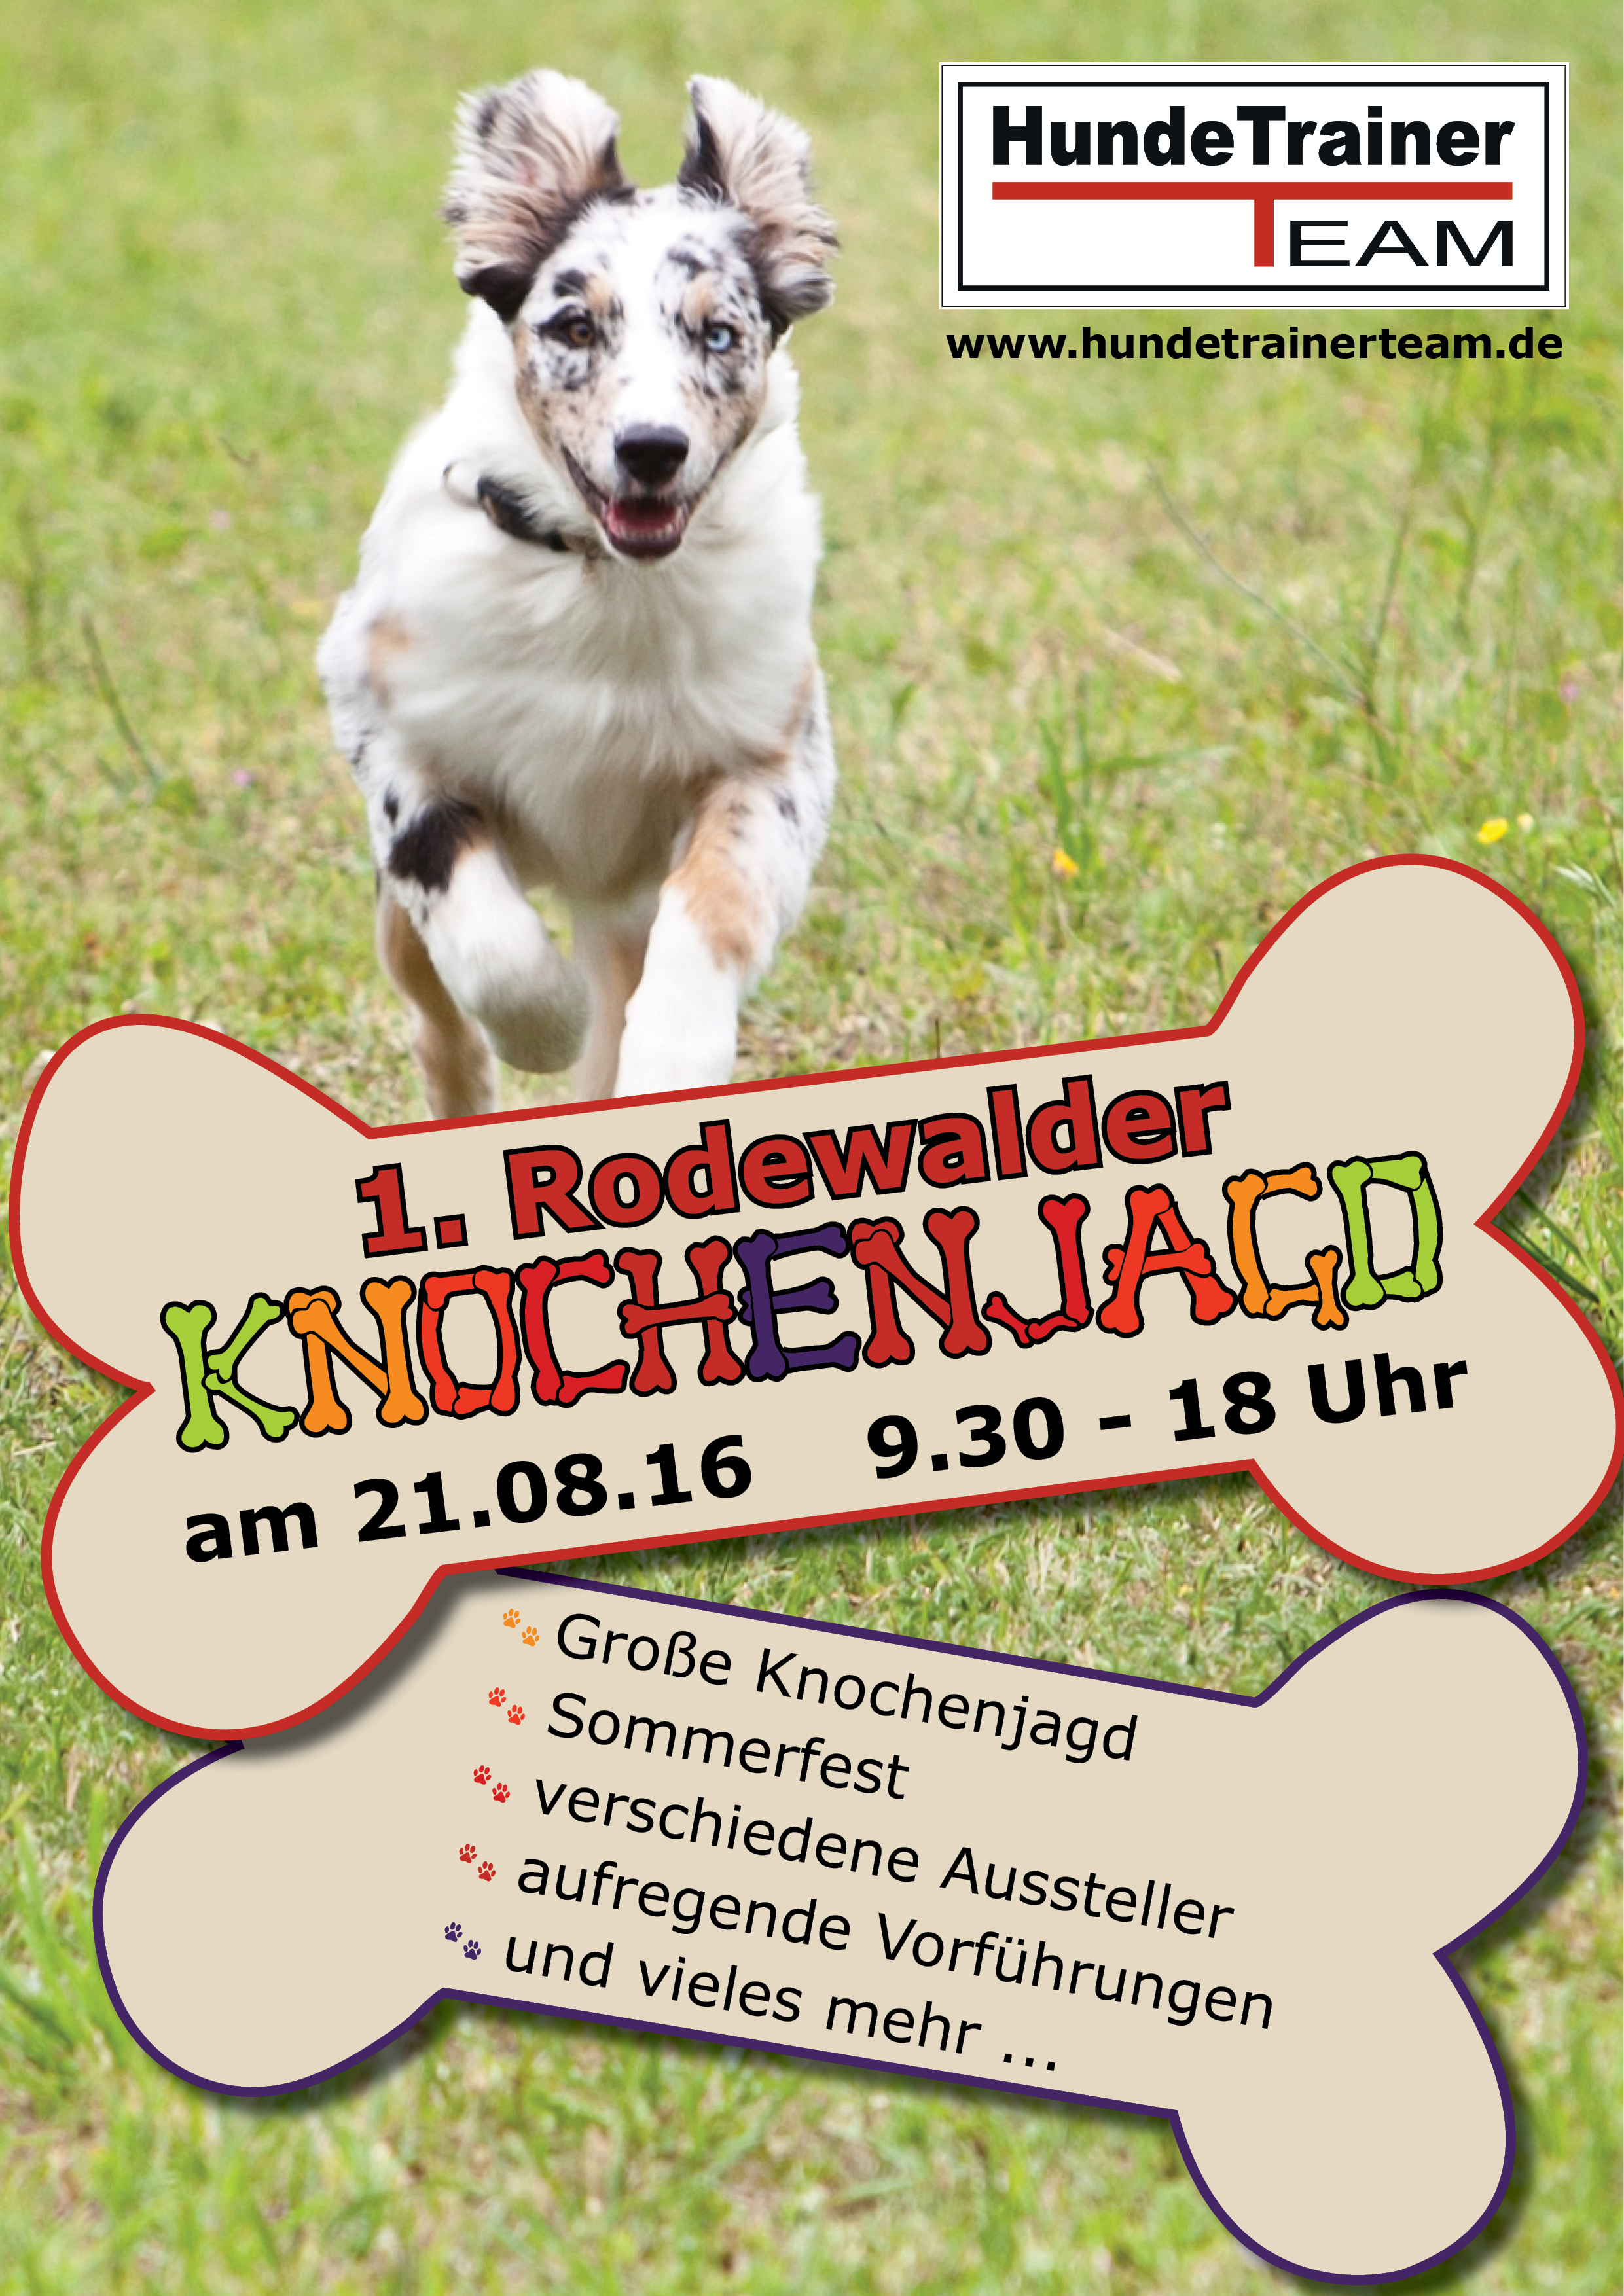 HundeTrainerTeam Knochenjagd Rodewald 21.08.2016